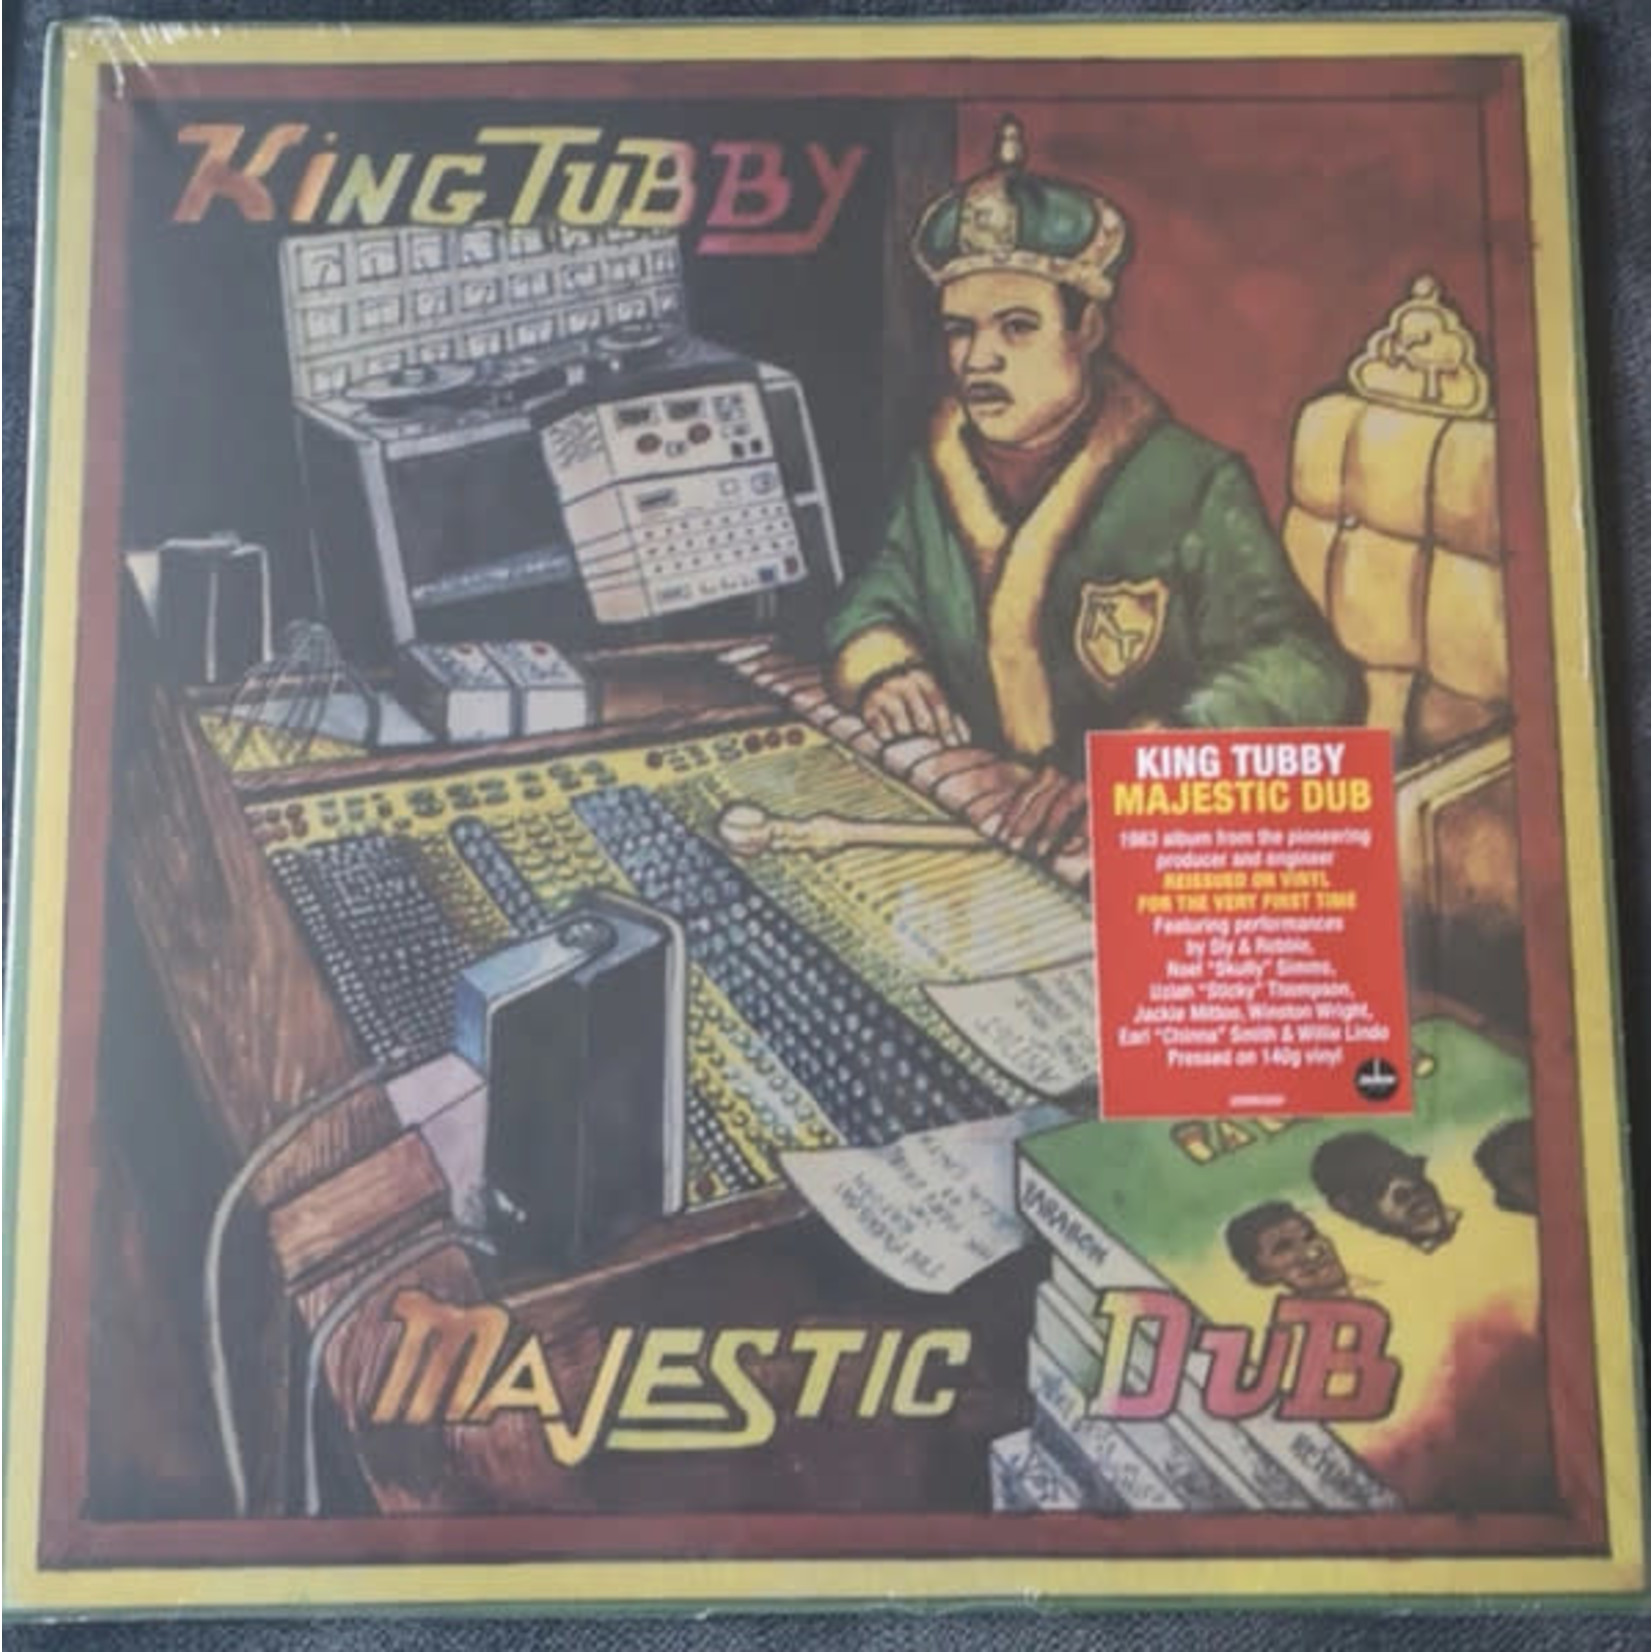 Demon King Tubby - Majestic Dub (LP)